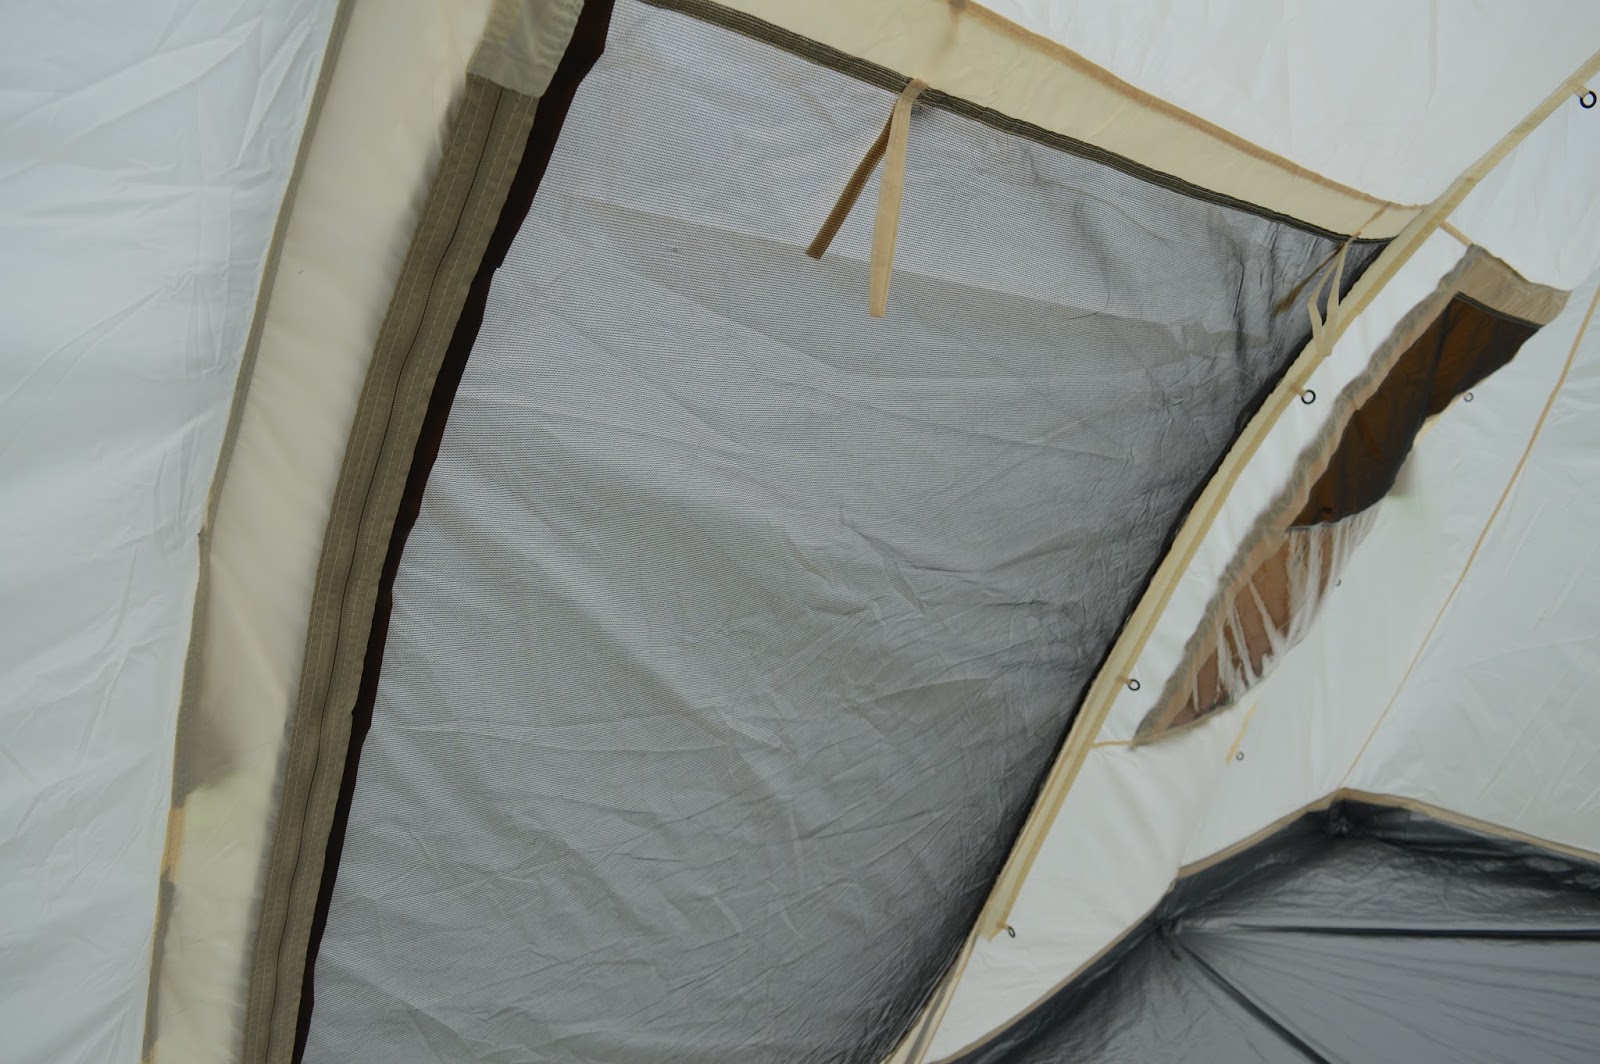 Skandika Kairo Six Man Tent Review